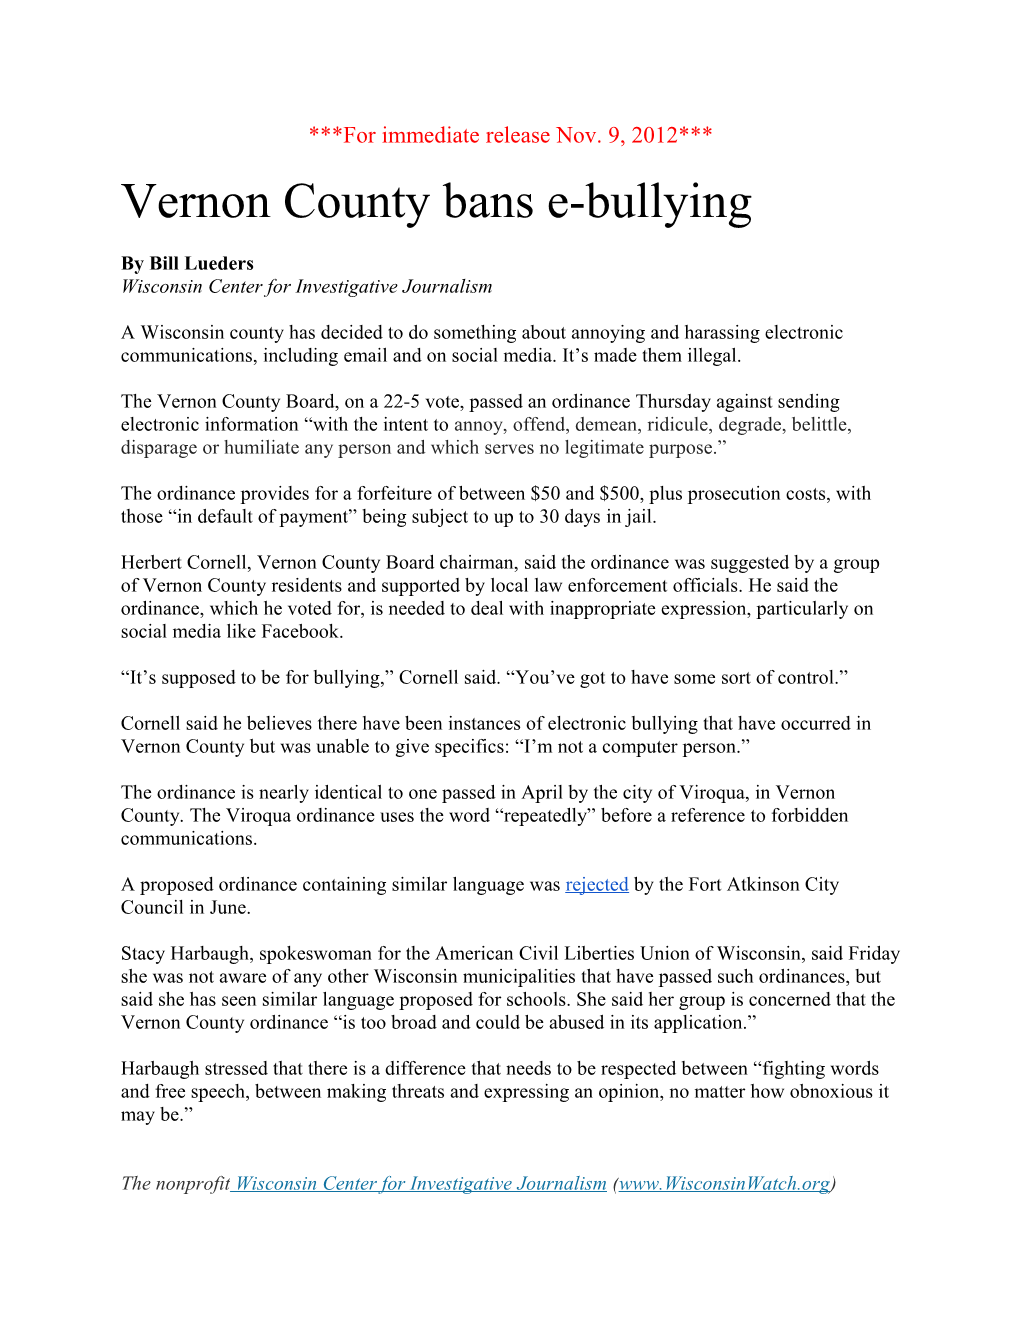 Vernon County Bullying Ordinance